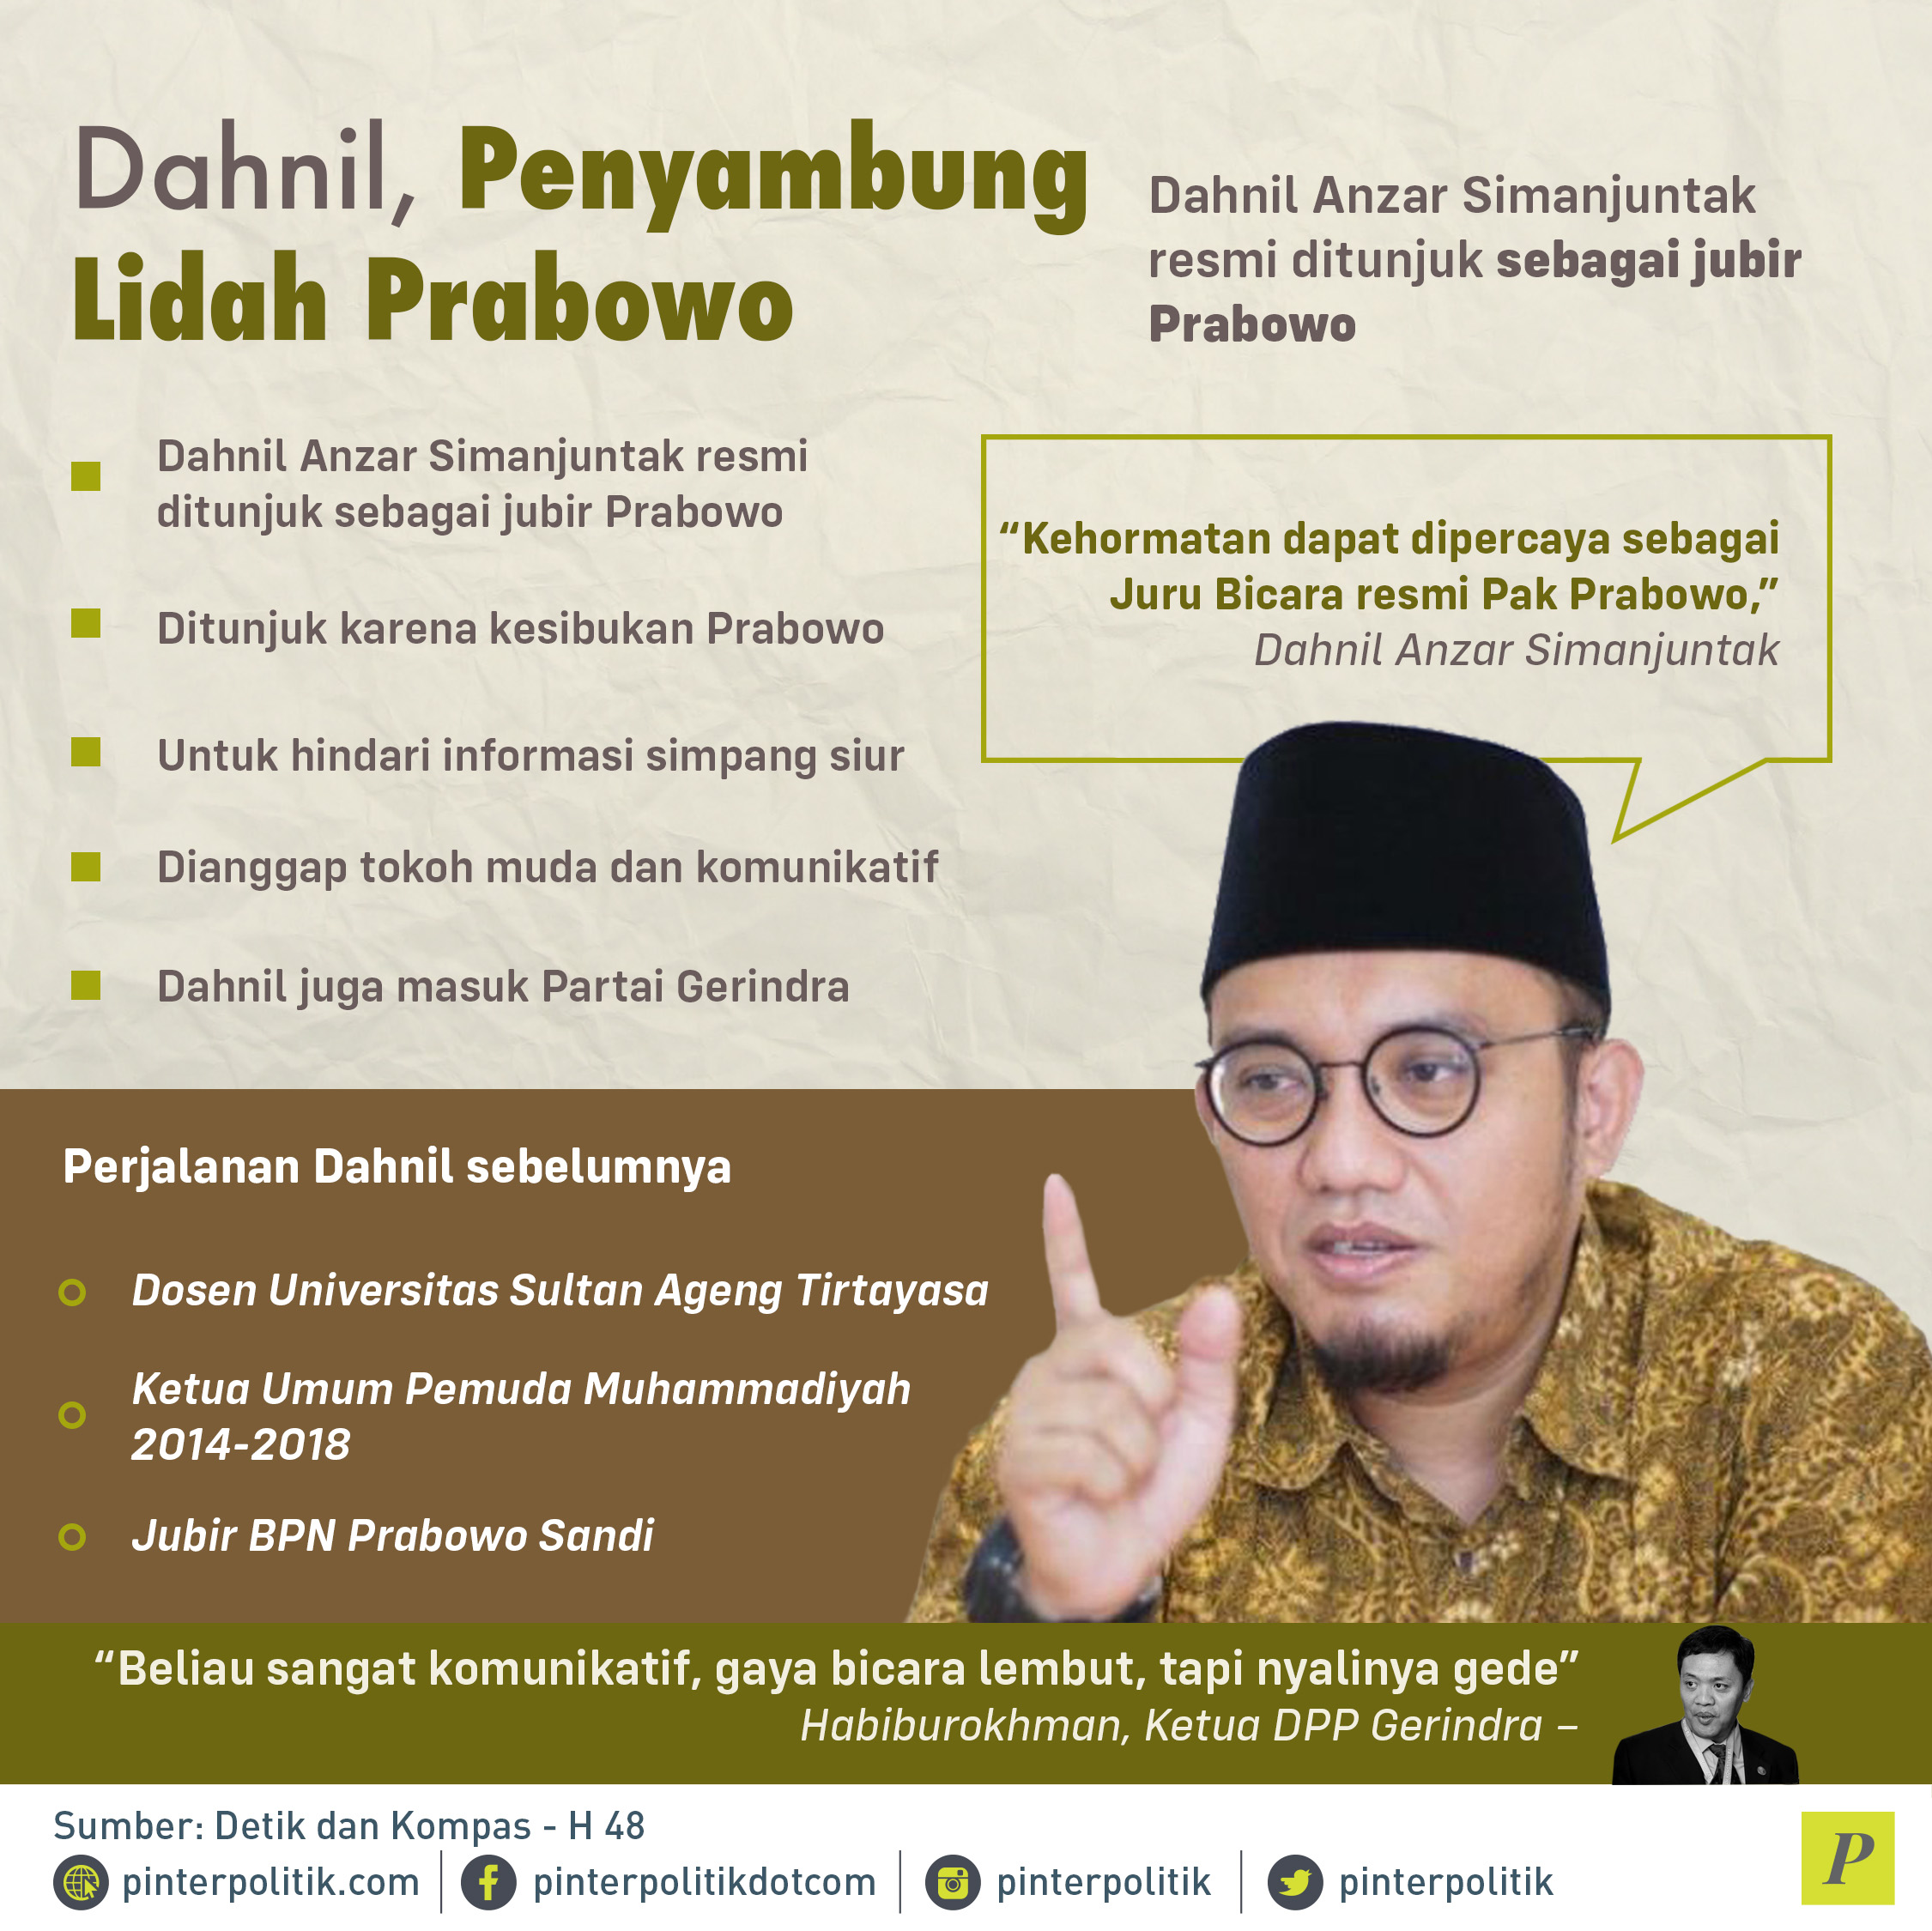 Dahnil Anzhar Simanjutak resmi ditunjuk sebagai jubir Prabowo